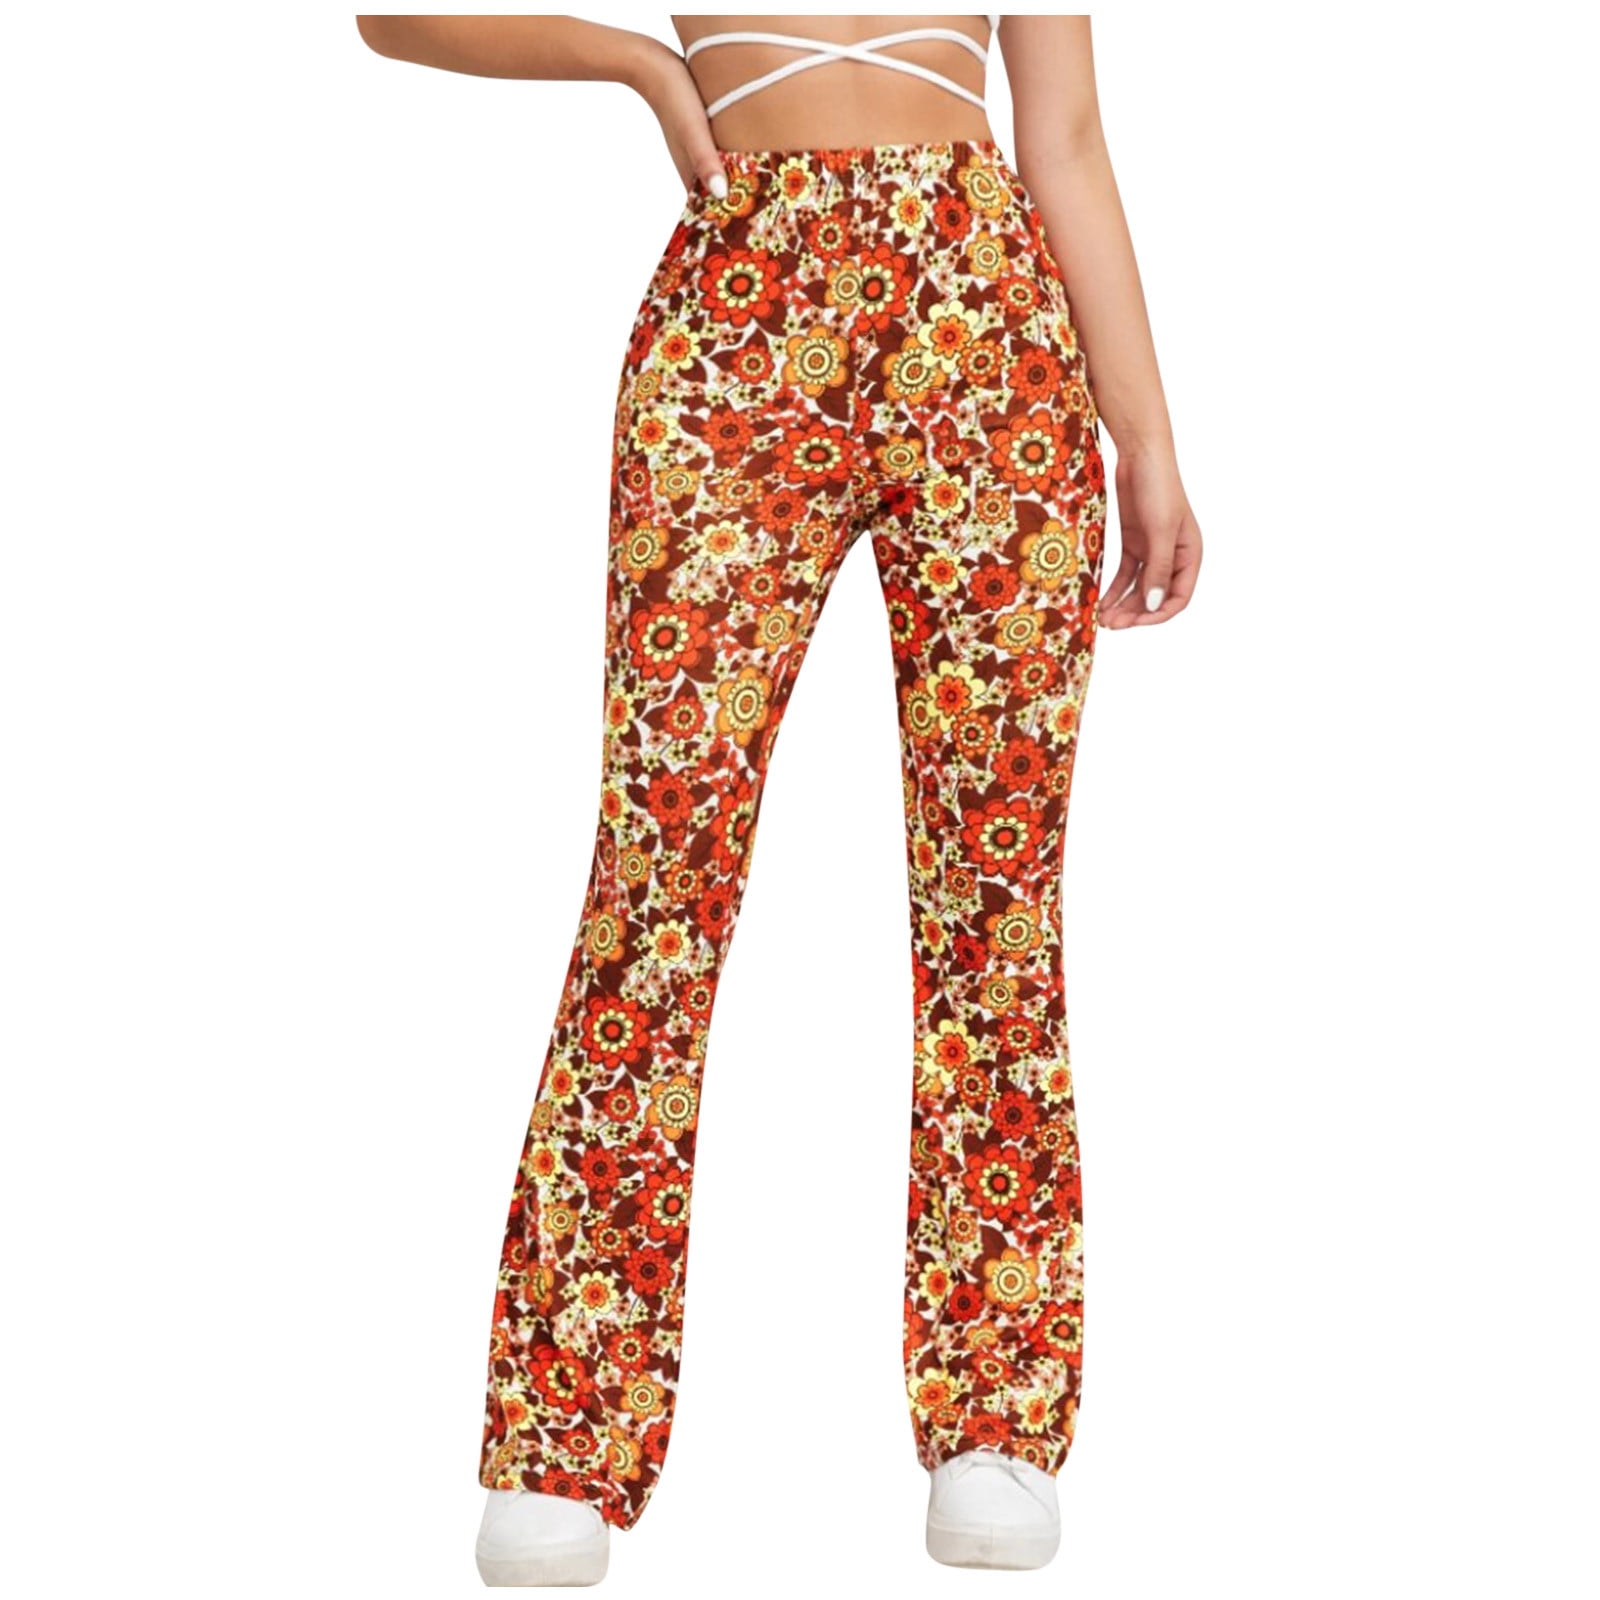 Women's Bootcut Yoga Pants Floral Print Elastic High Waist Flare